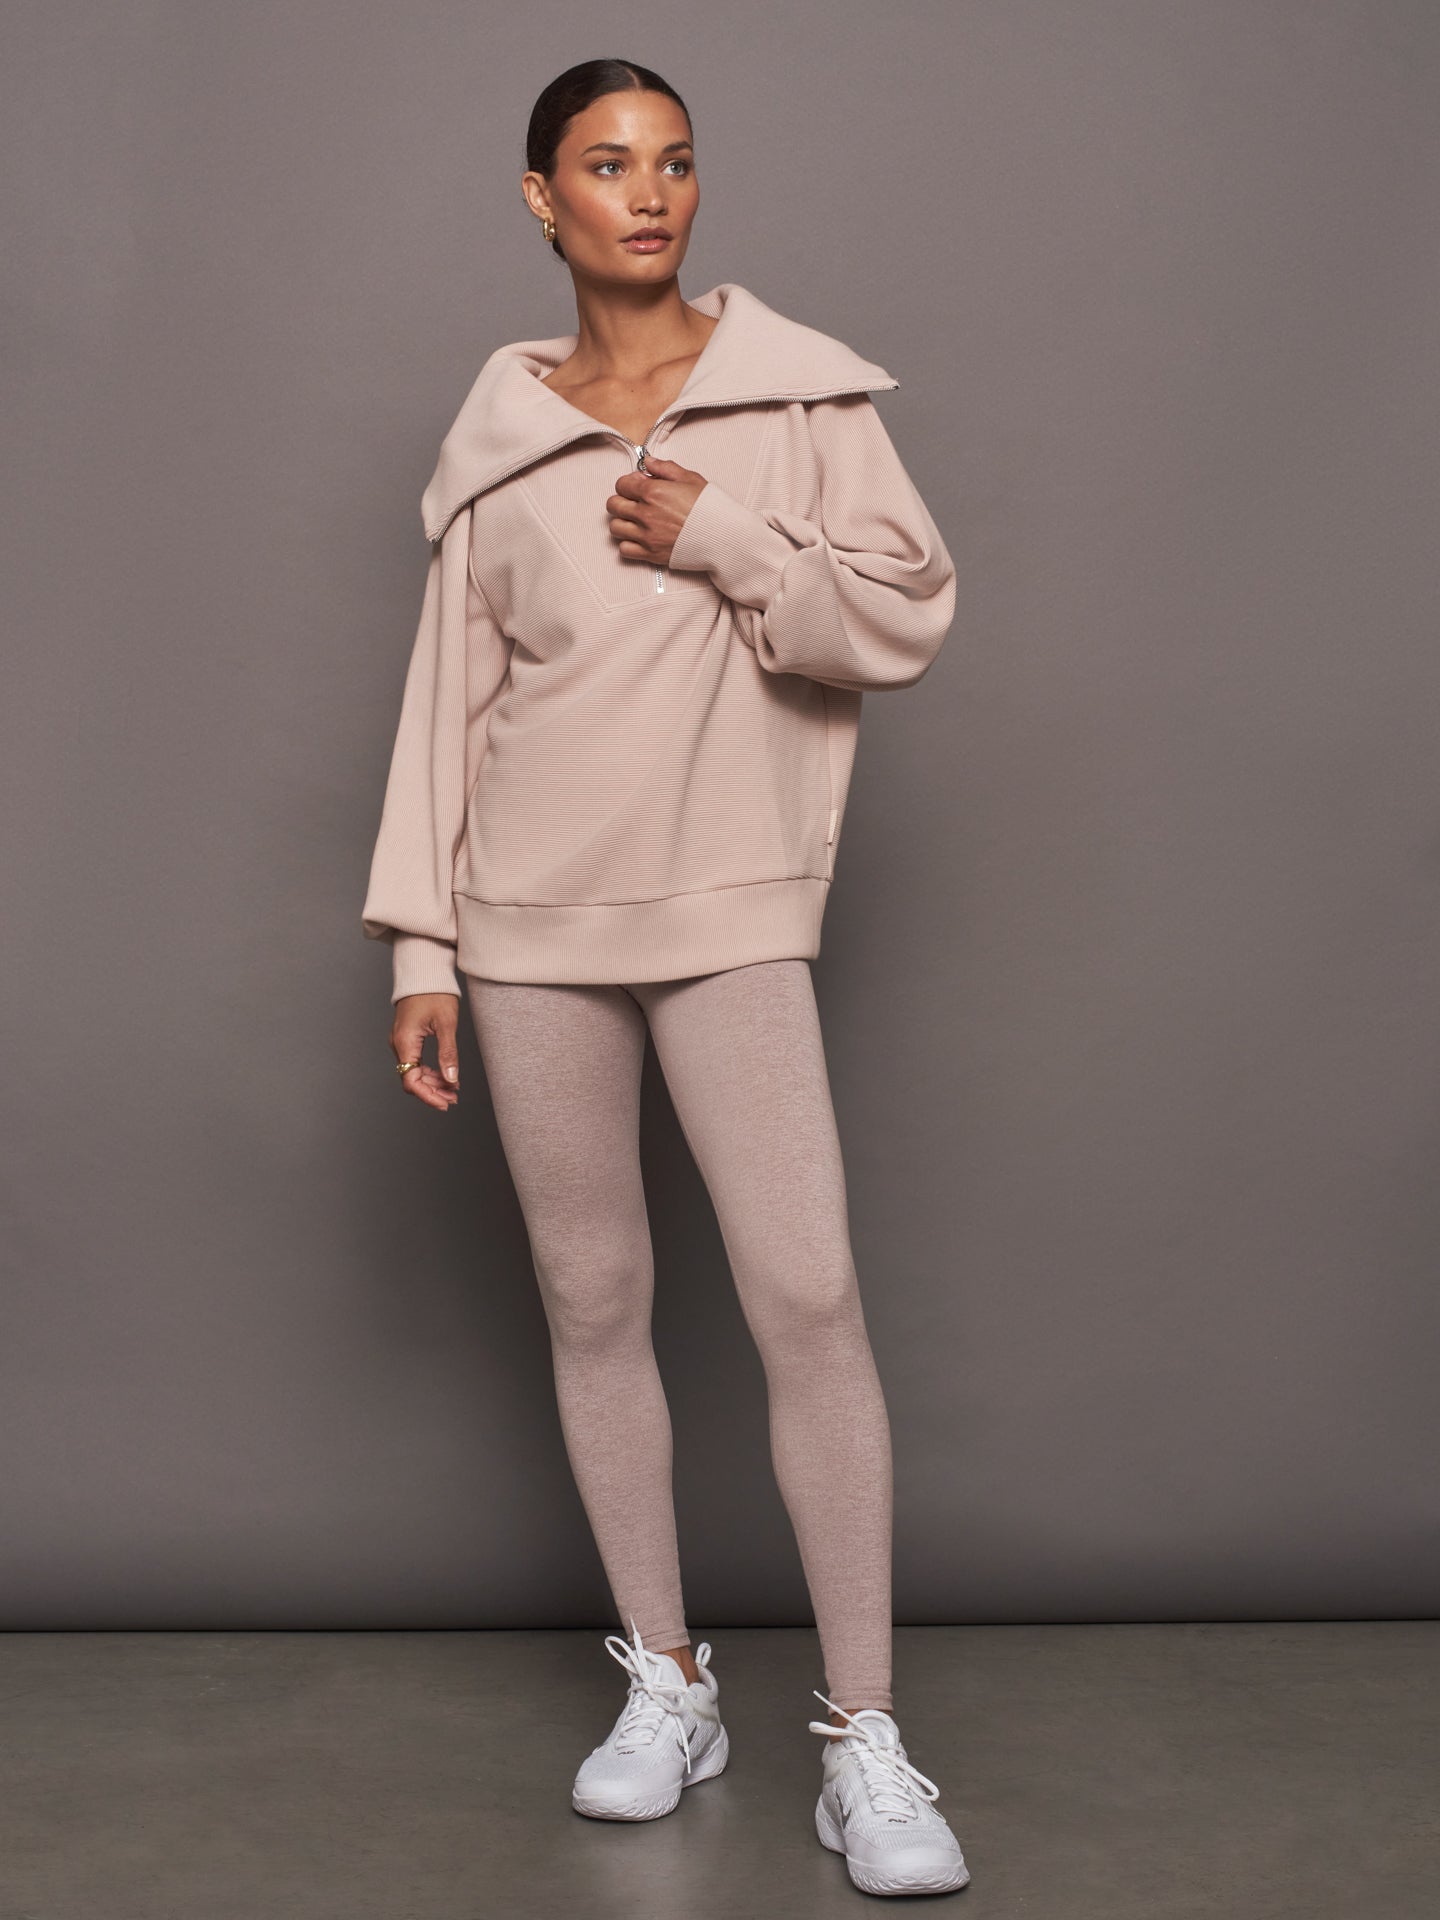 Champion Oban Half Zip Fleece – New Forest Clothing